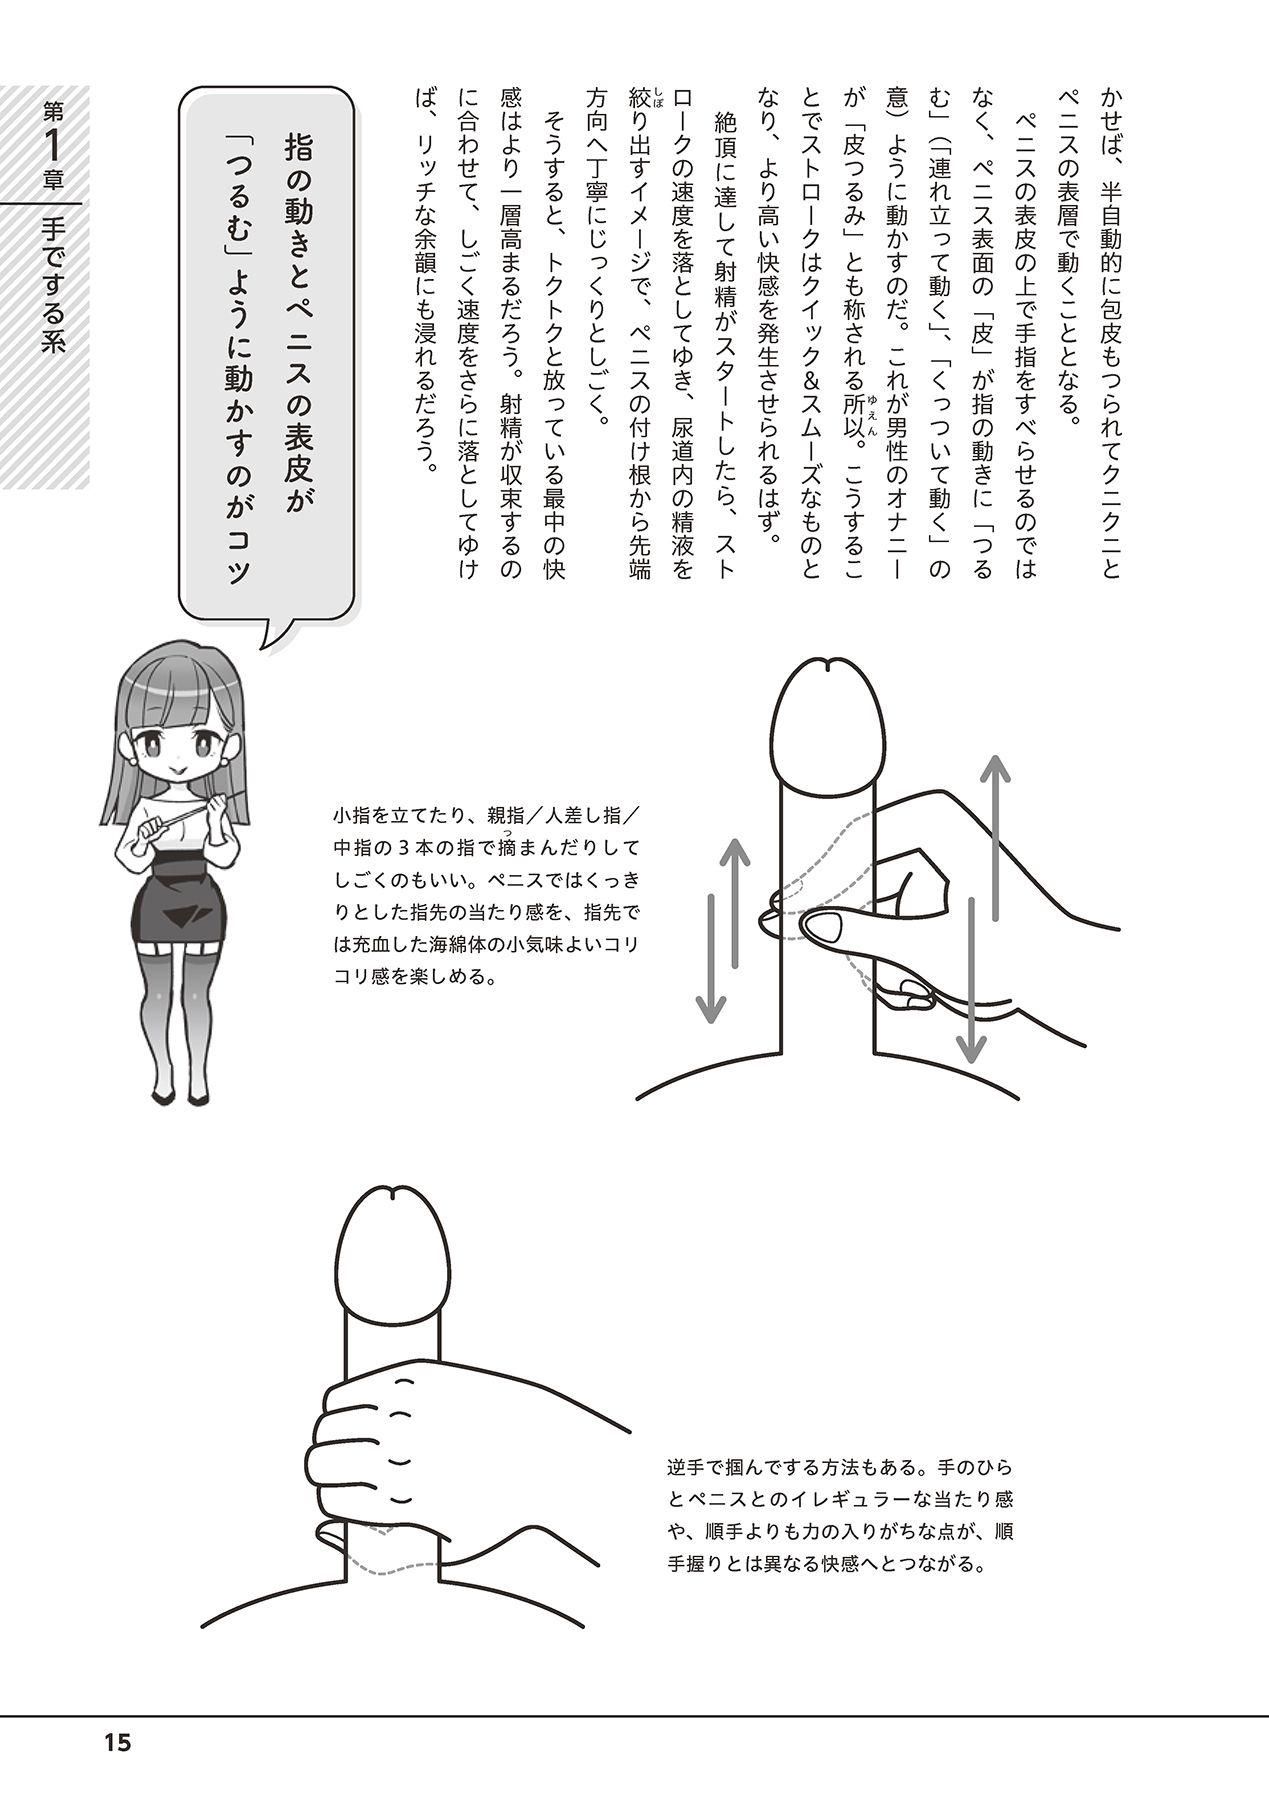 Otoko no Jii Onanie Kanzen Manual Illustration Han...... Onanie Play 16